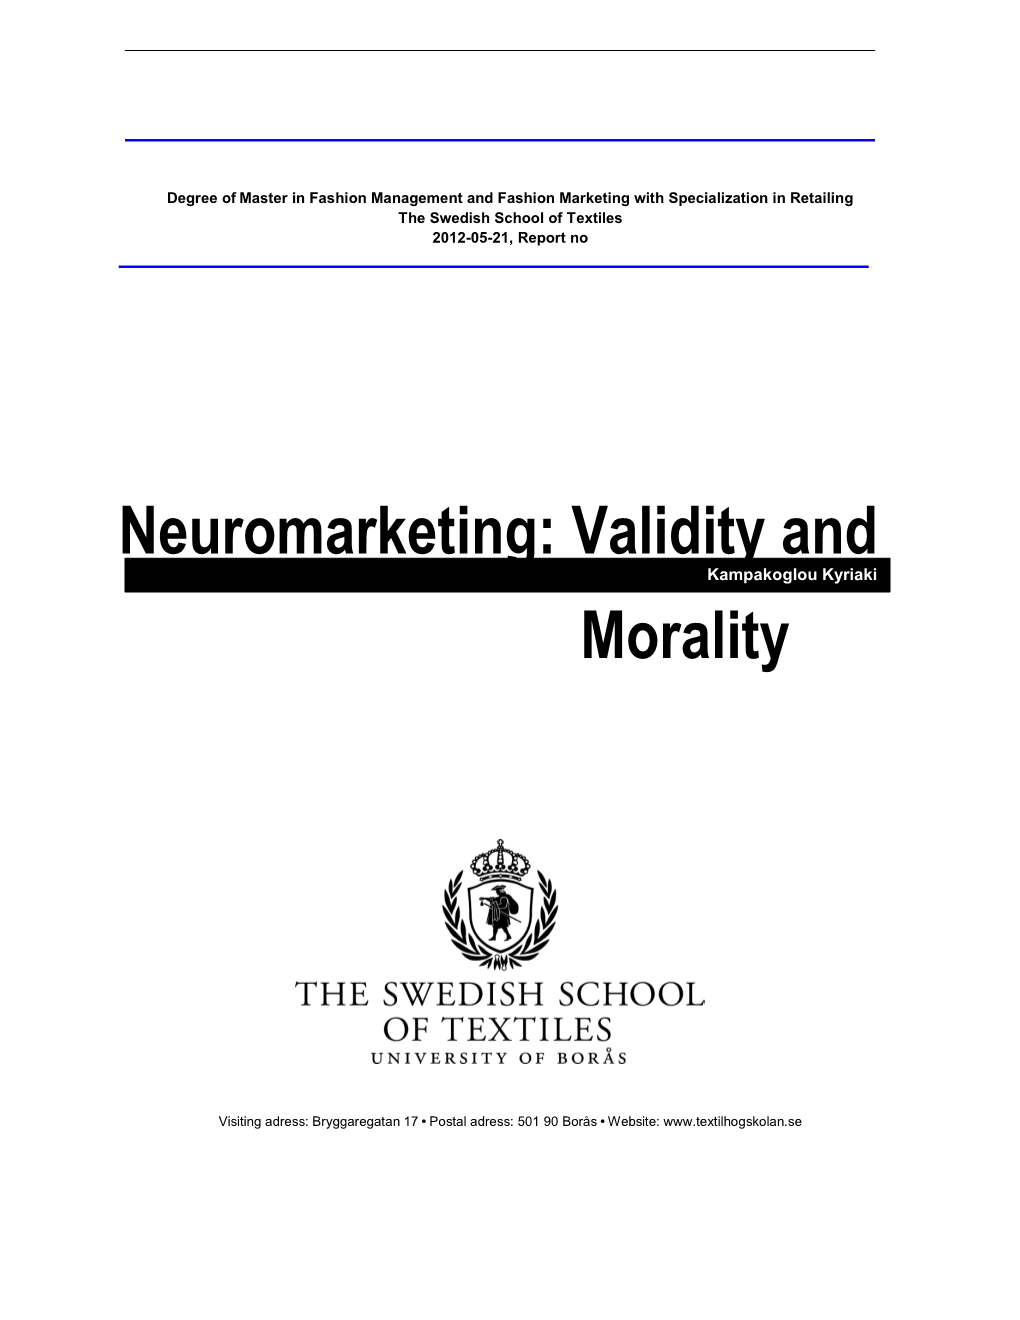 Neuromarketing: Validity and Morality Publication Year: 2012 Author: Kampakoglou Kyriaki Supervisor: Eva Gustafsson